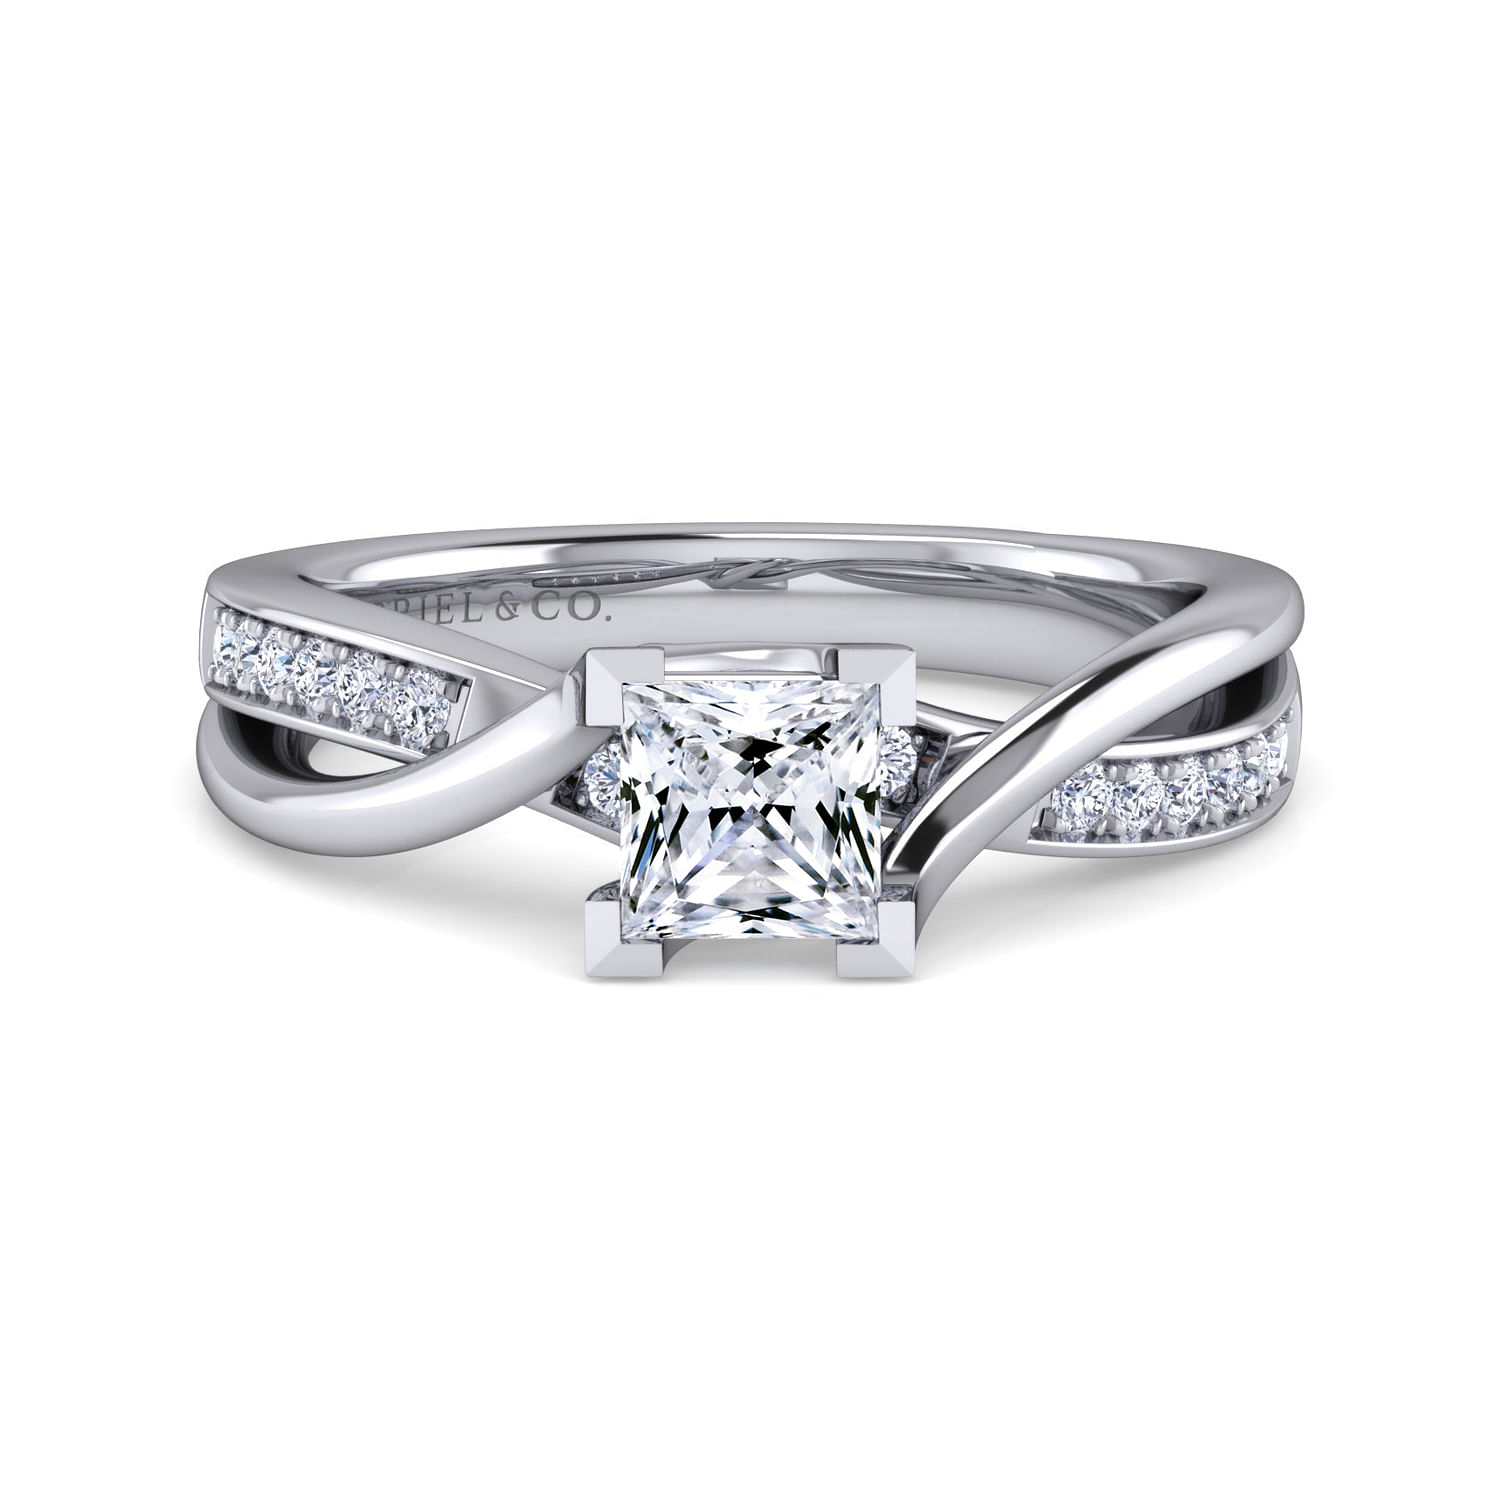 Aleesa - Platinum Twisted Princess Cut Diamond Engagement Ring